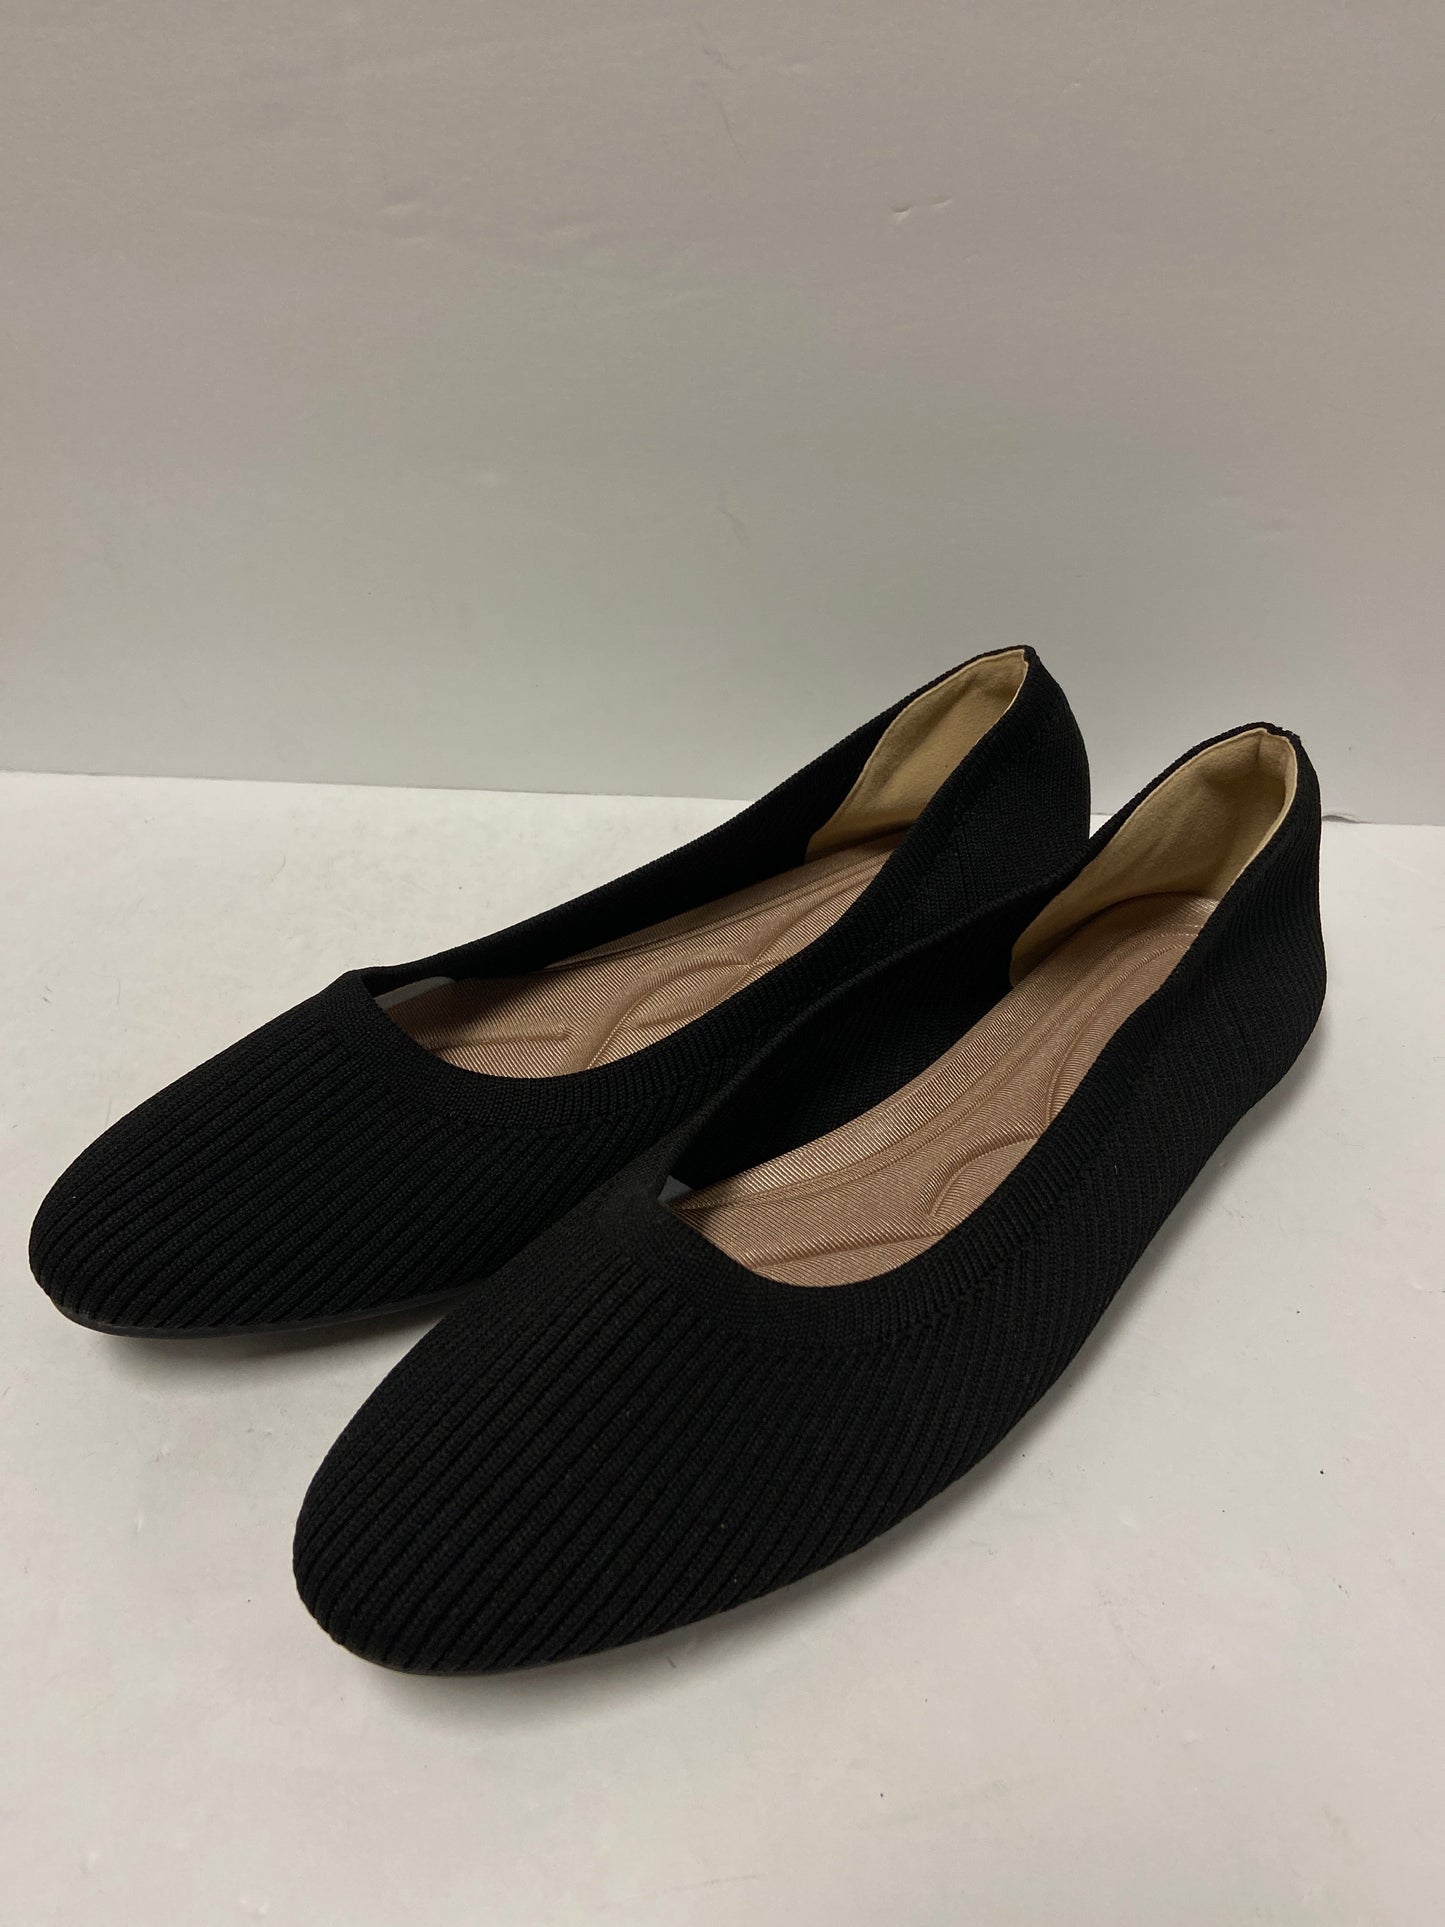 Black Shoes Flats Clothes Mentor, Size 10.5